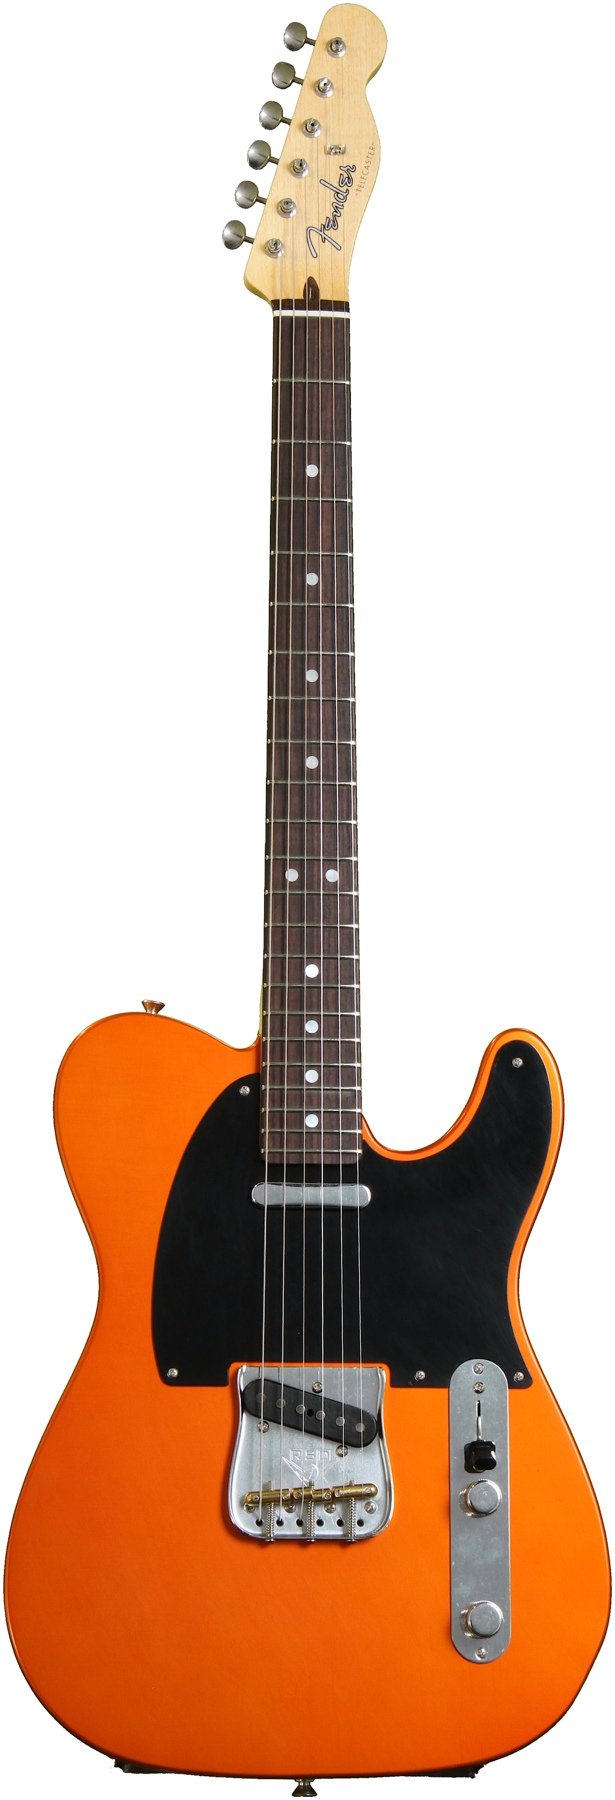 Fender Custom Shop Telecaster Pro Closet Classic - Candy Tangerine 